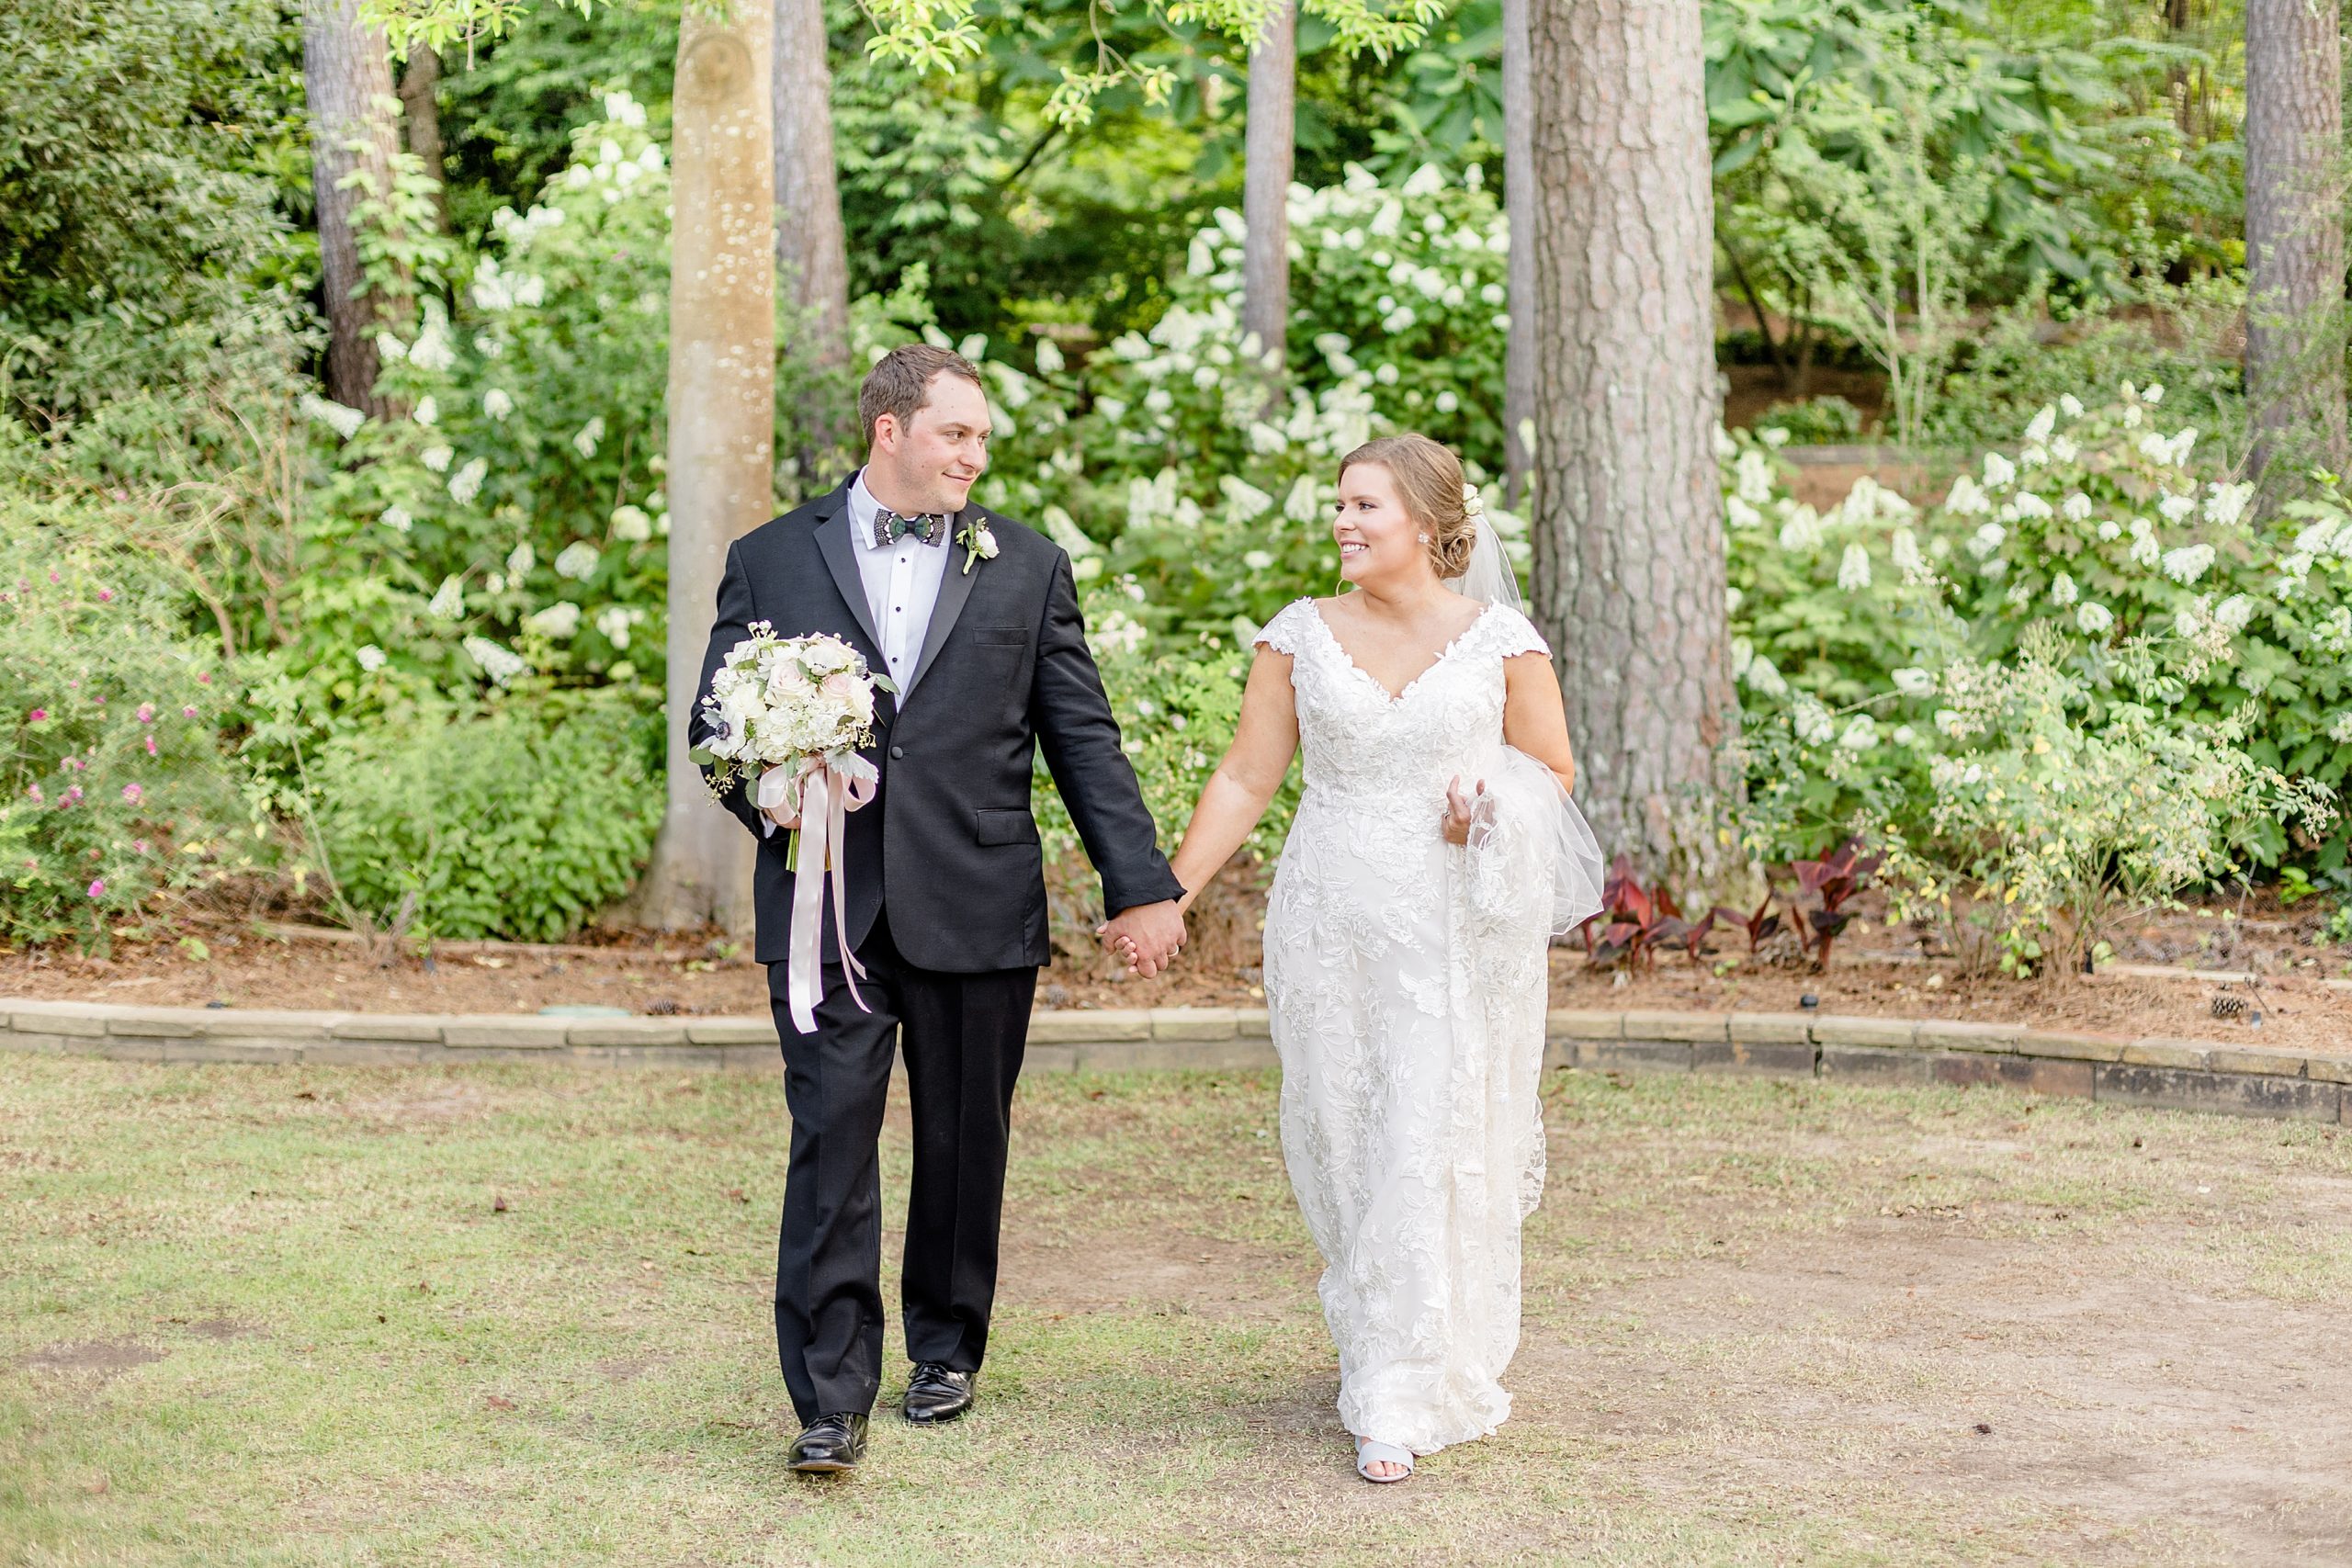 Stanleys Wedding Photos at the Birmingham Botanical Gardens in Birmingham, Alabama - Katie & Alec Photography